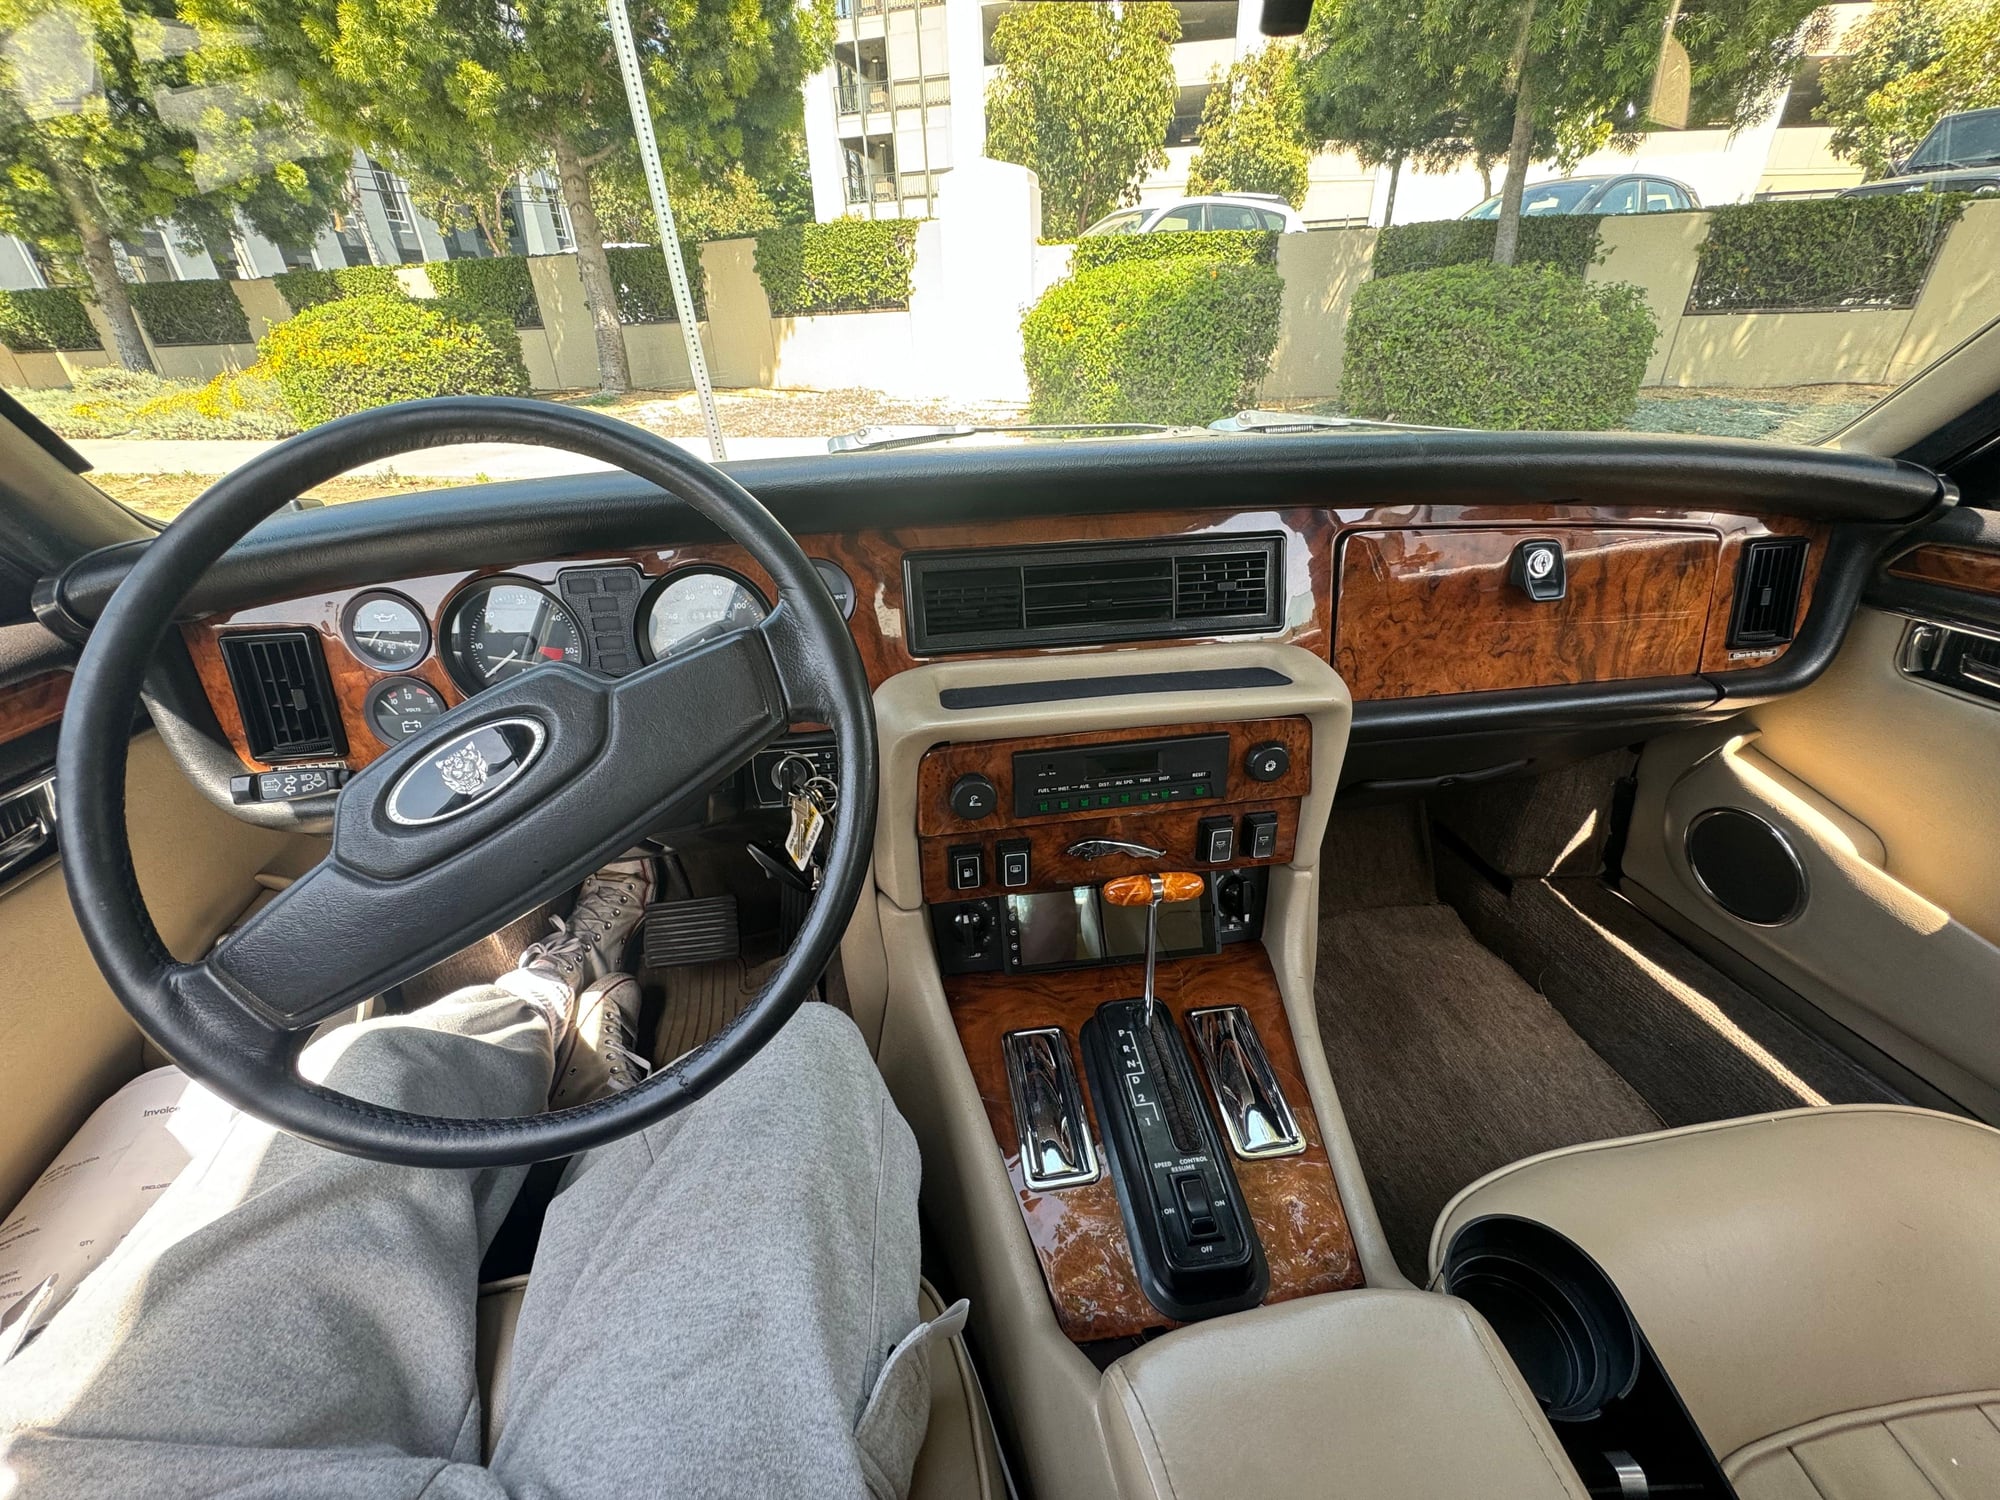 1987 Jaguar Vanden Plas - 1987 jaguar xj6 Van Den Plas - for sale: $8000 - Los Angeles - Used - VIN sajay1348hc471276 - 134,000 Miles - 6 cyl - Automatic - Sedan - Gold - Los Angeles, CA 90038, United States